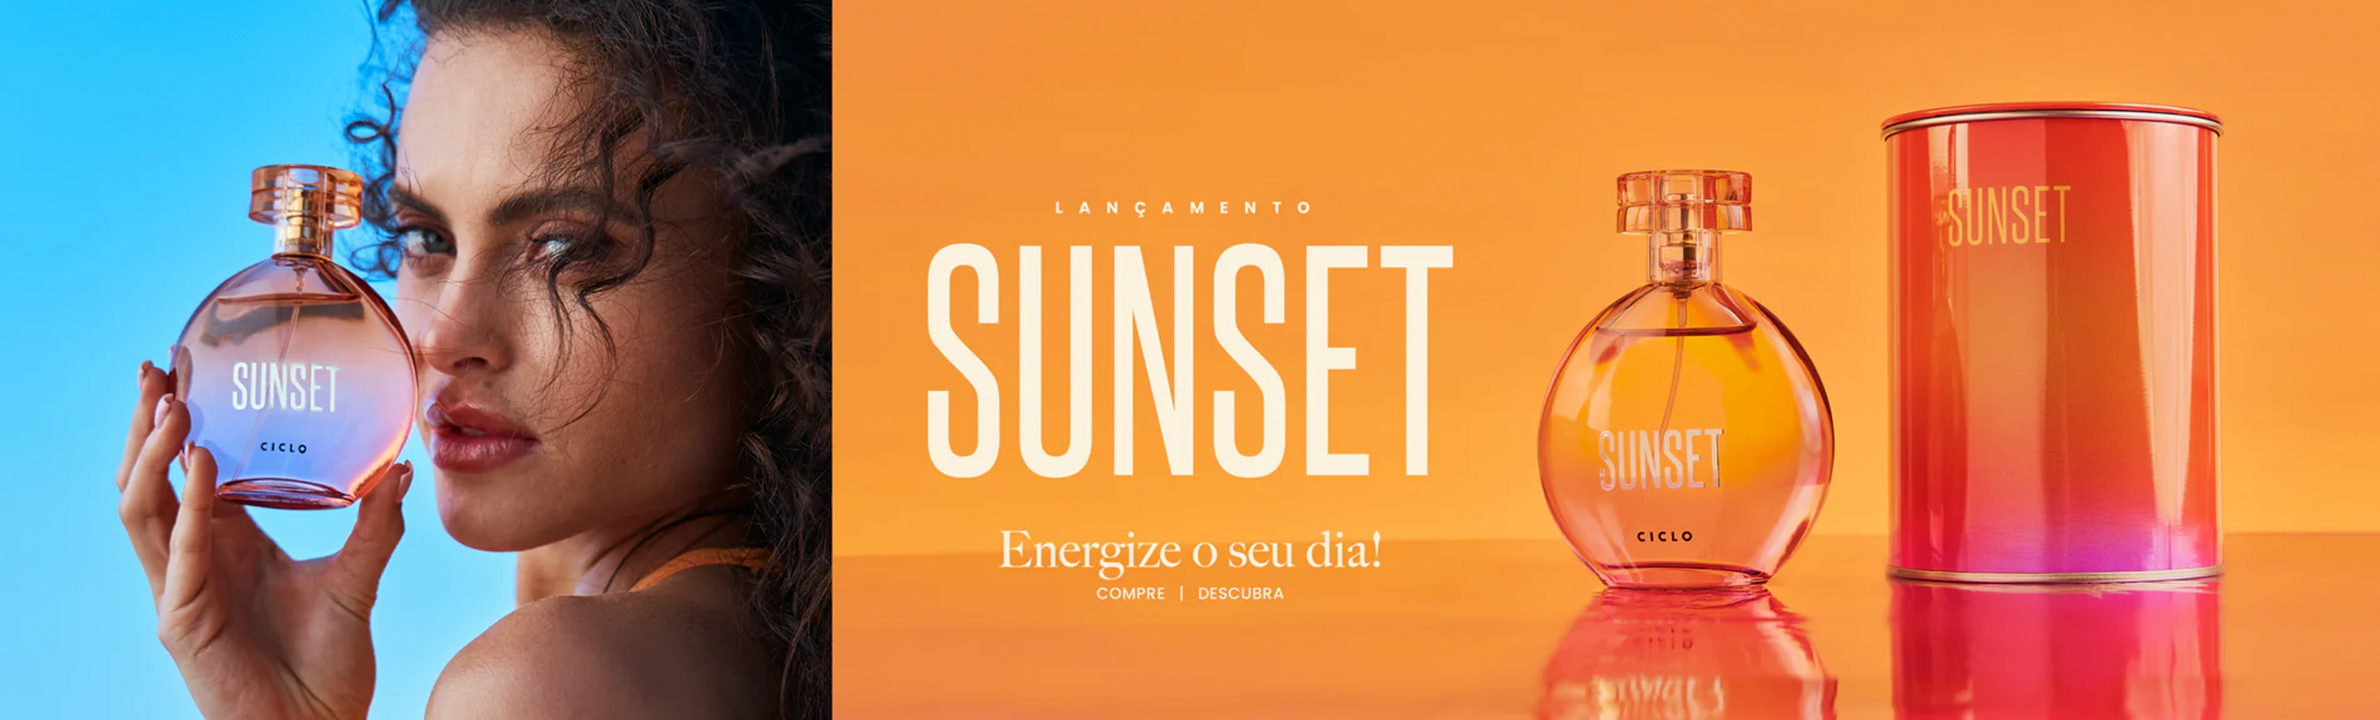 Energize seu dia! | Sunset by Ciclo Cosméticos